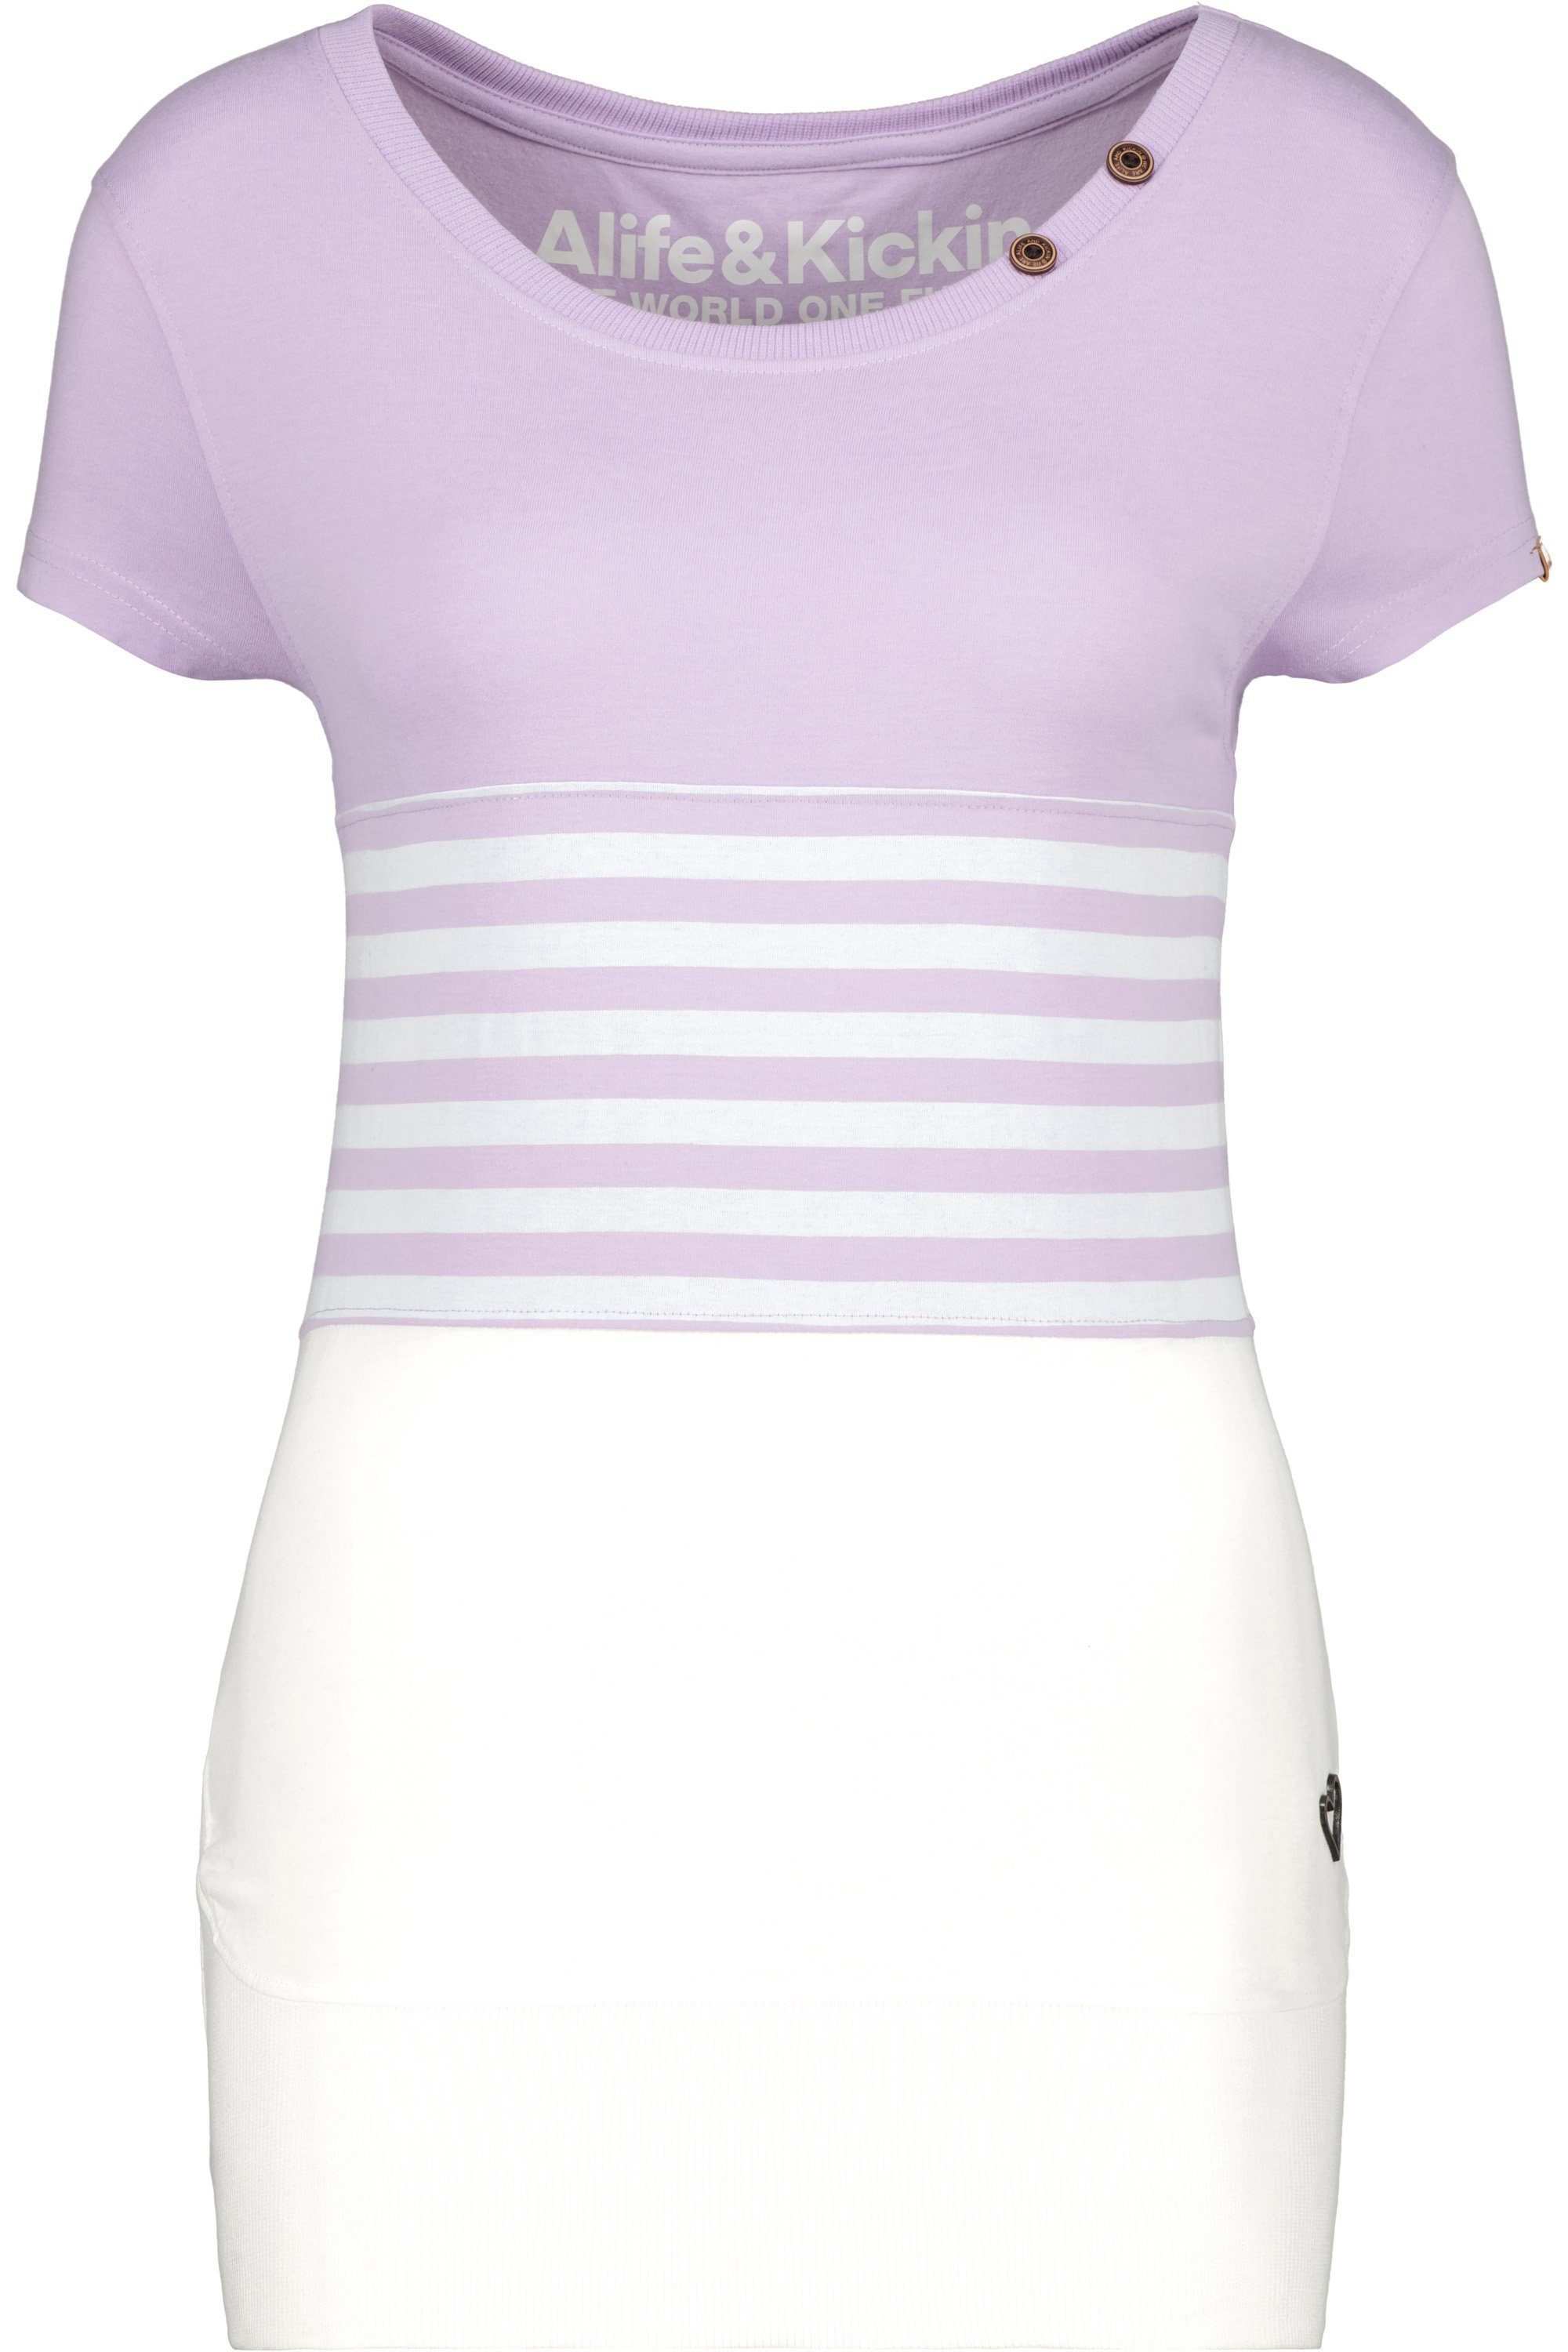 Alife & Z Rundhalsshirt Kickin Shirt Shirt Damen Kurzarmshirt, digital CoriAK lavender